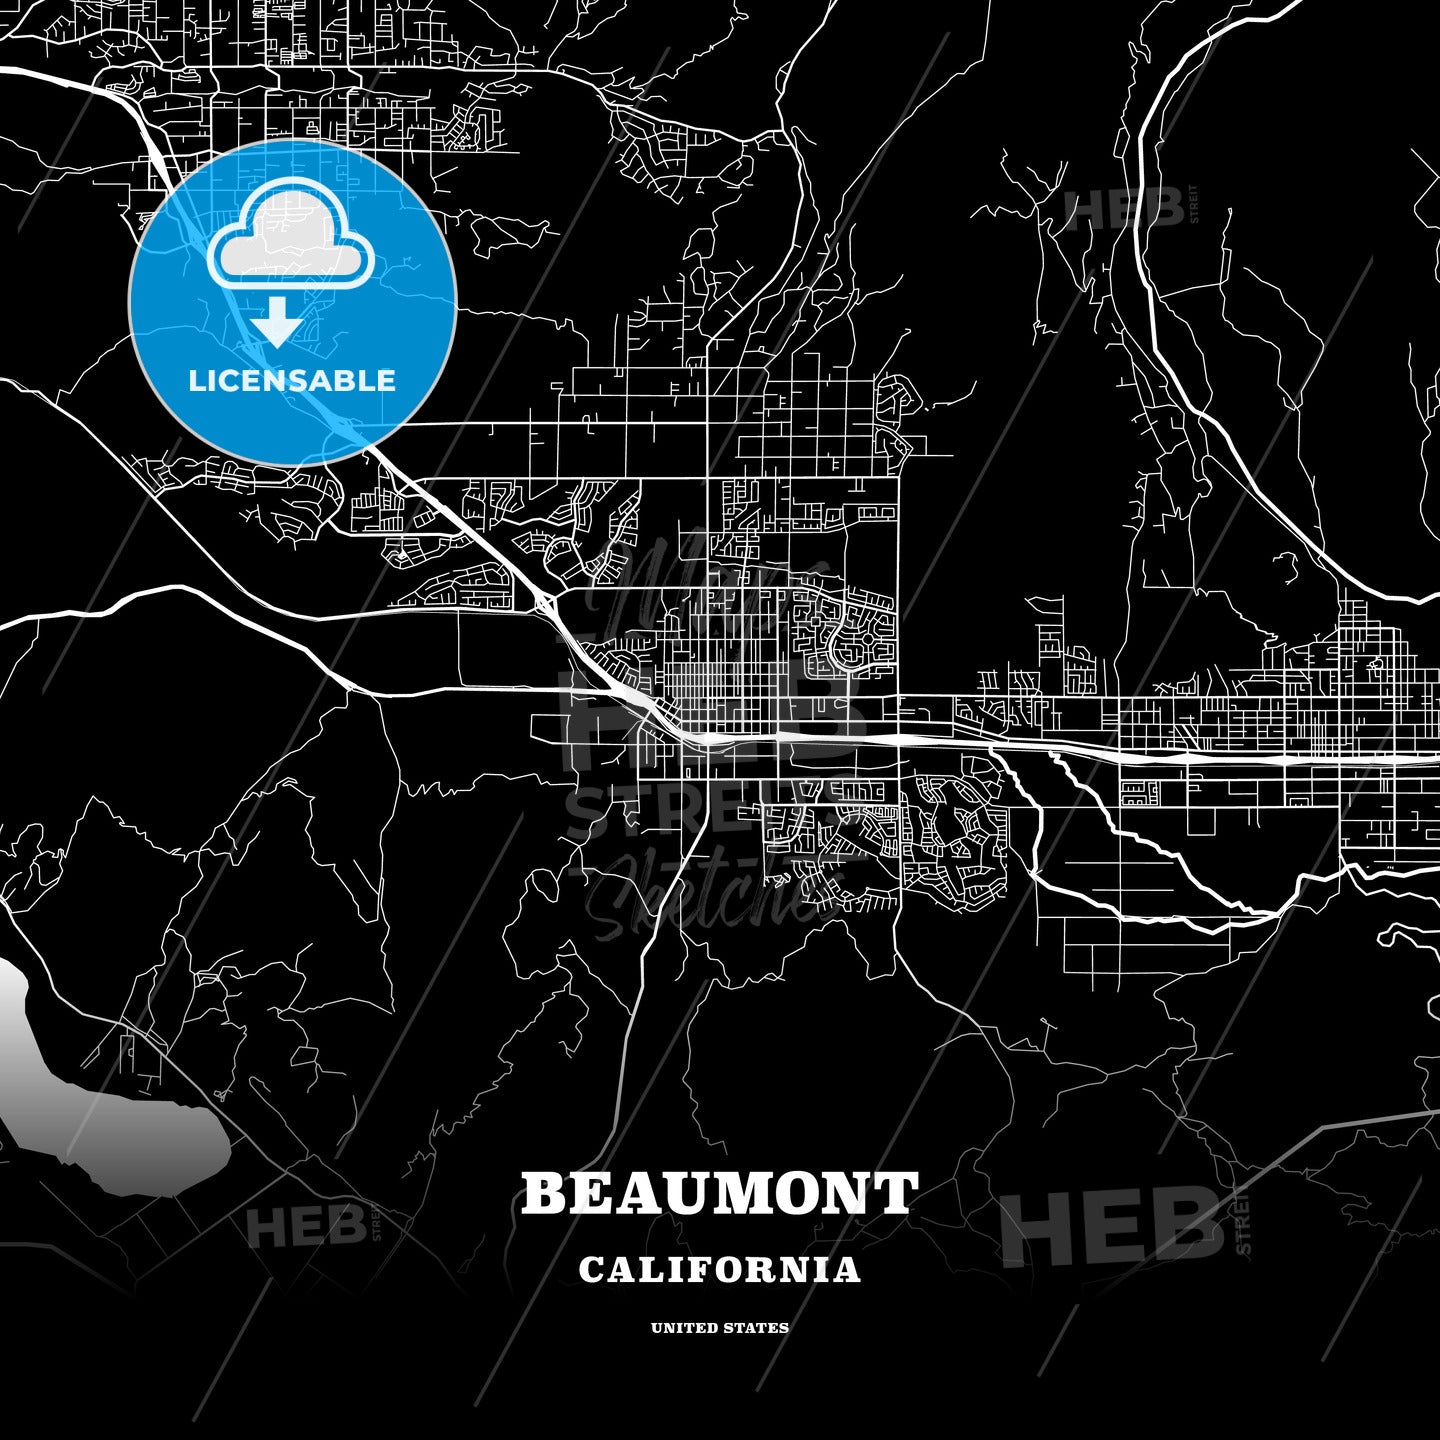 Beaumont, California, USA map